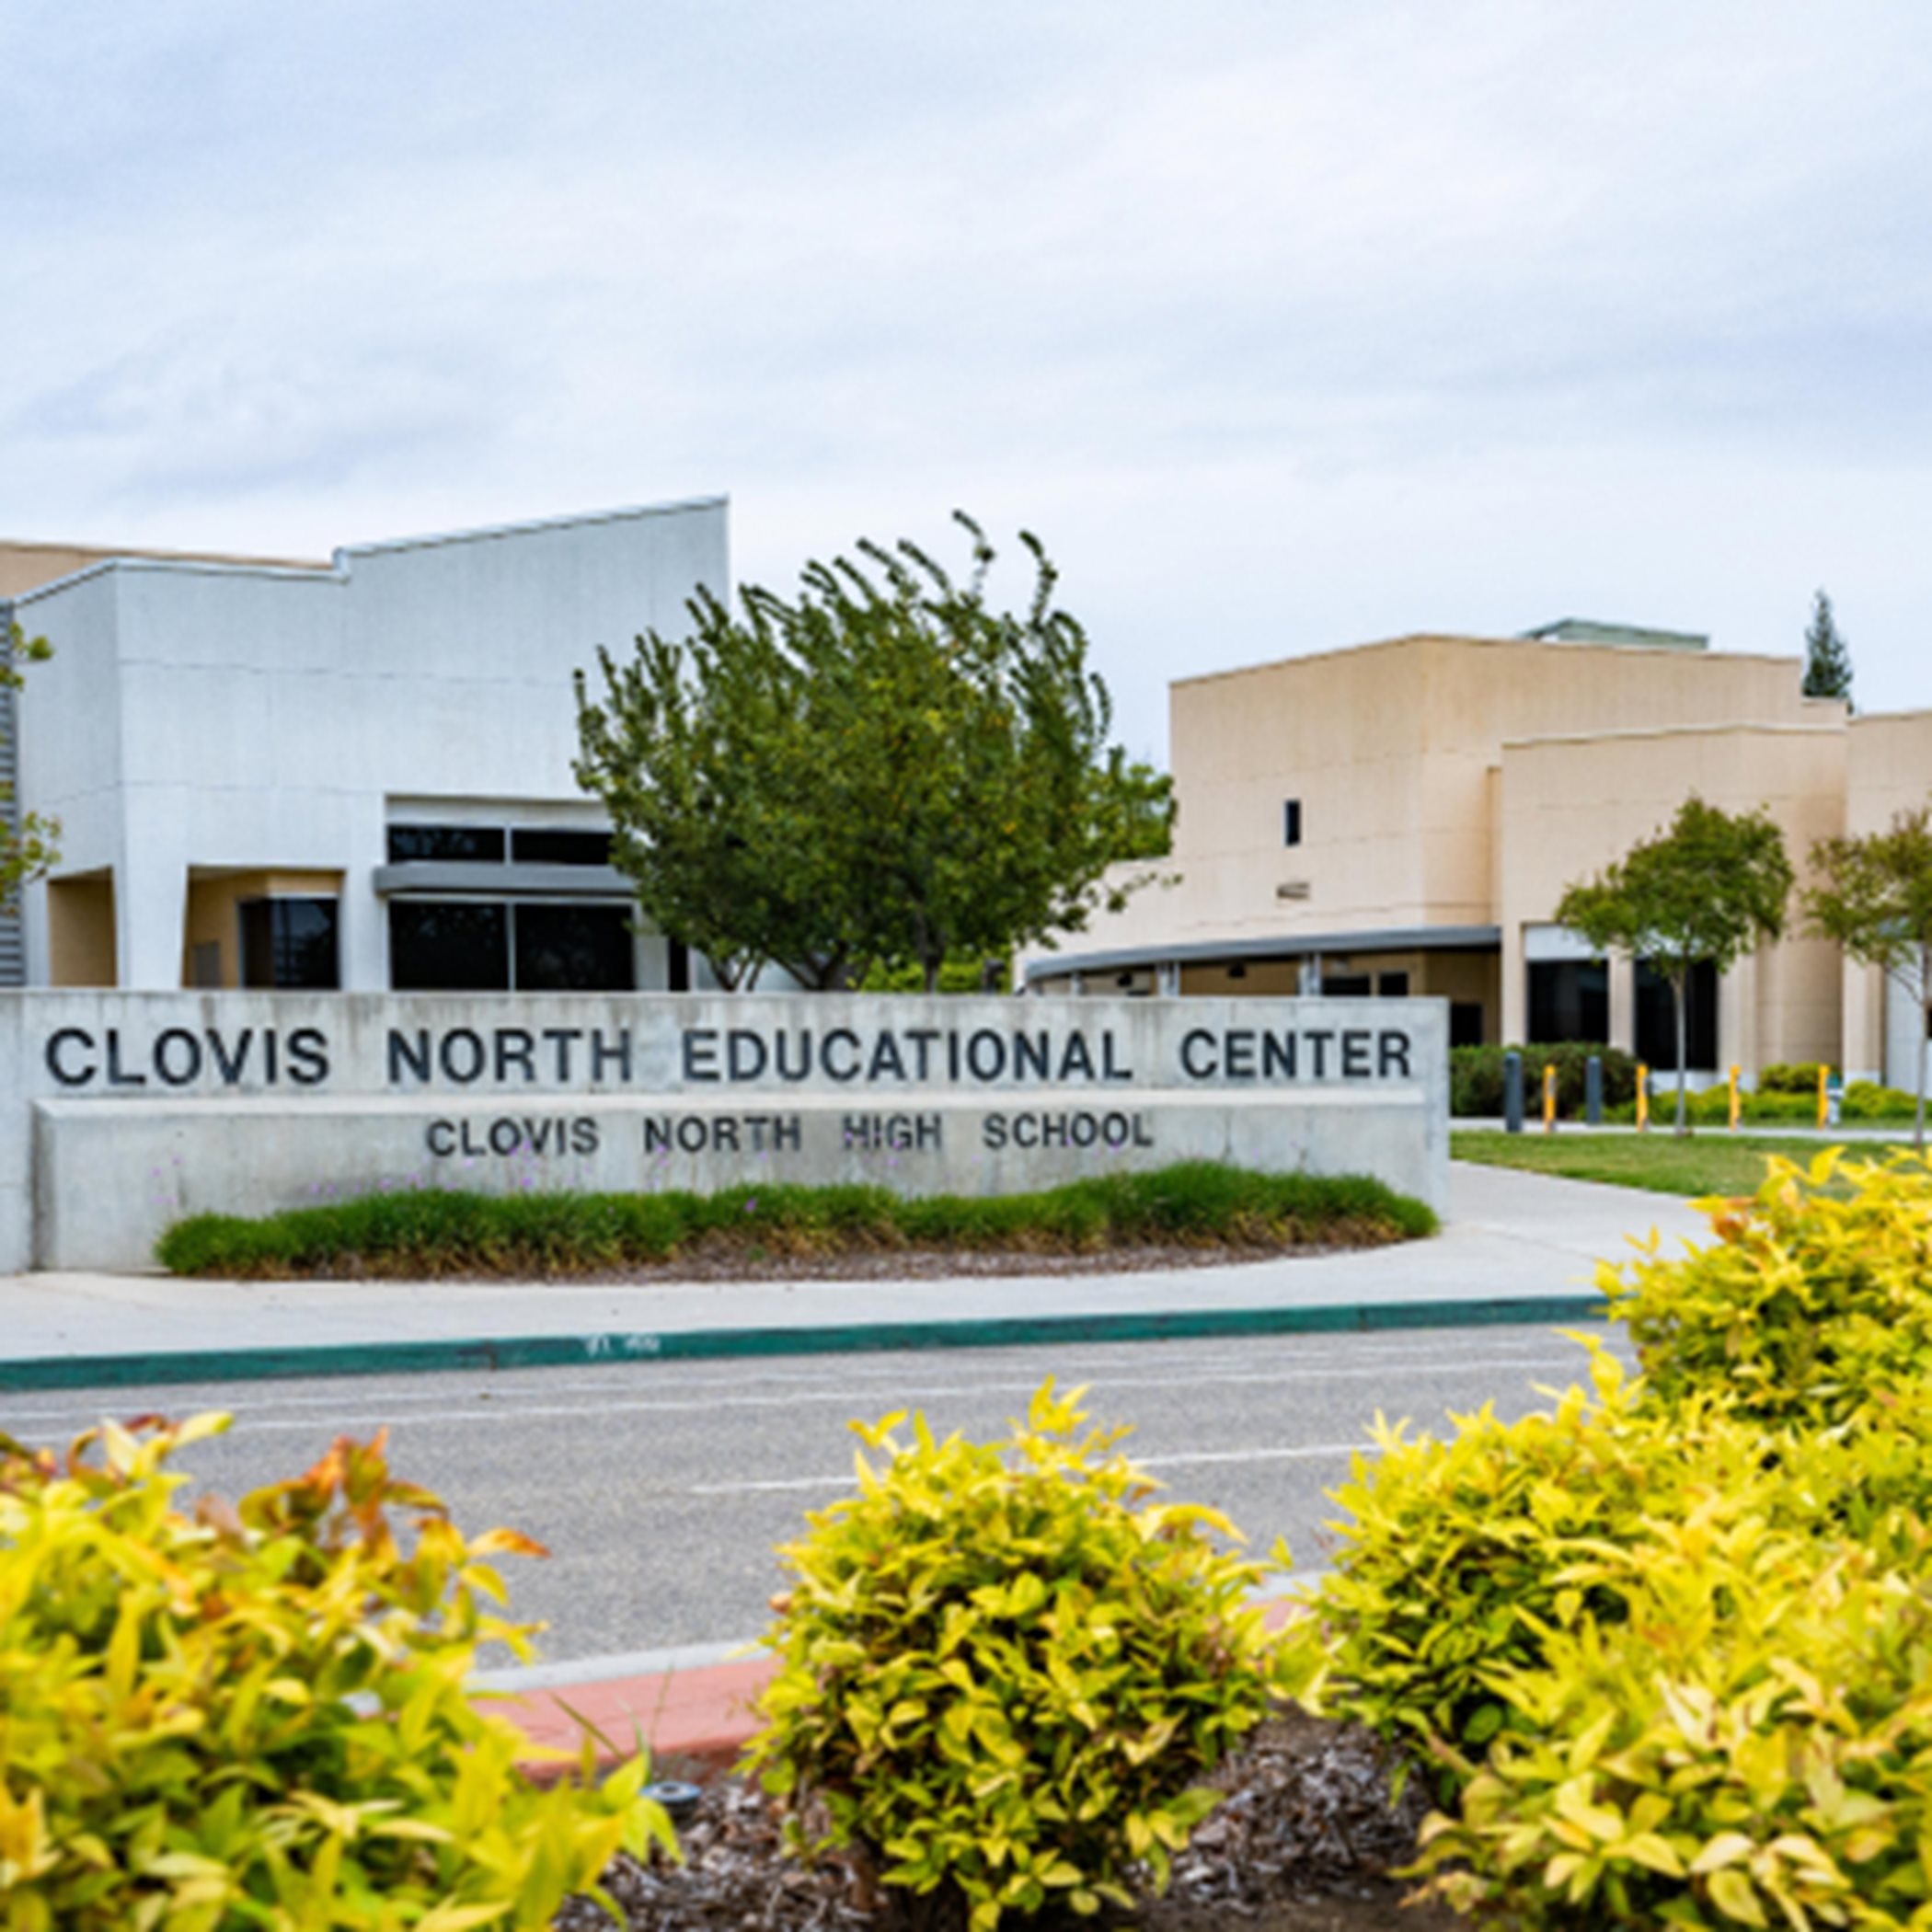 Entrance of Clovis North High School